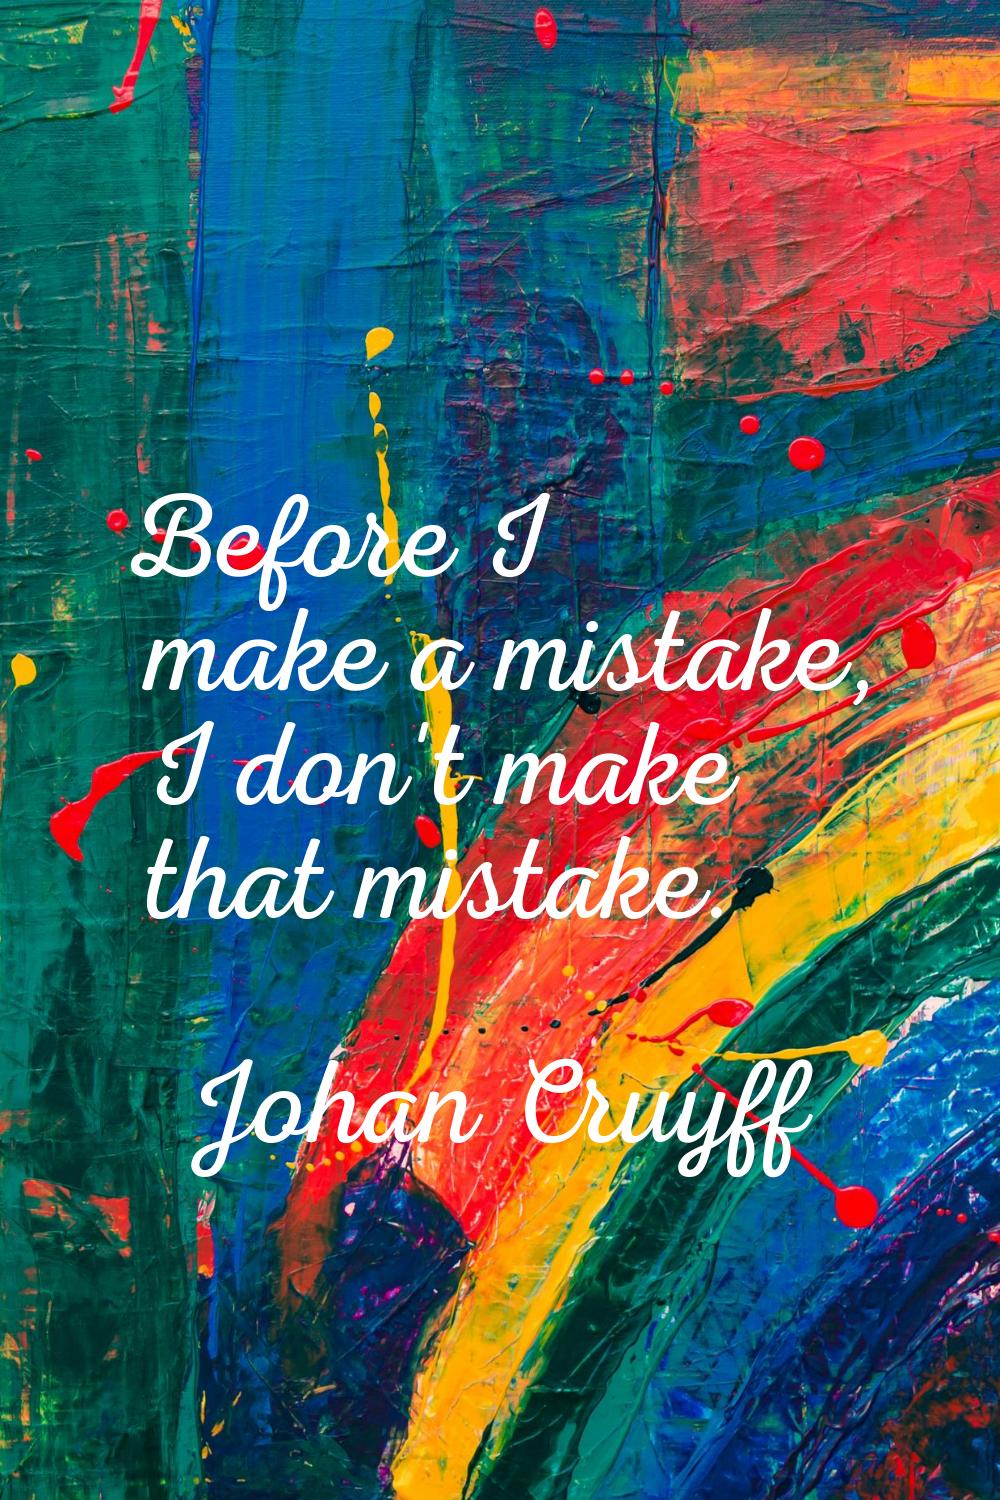 Before I make a mistake, I don't make that mistake.